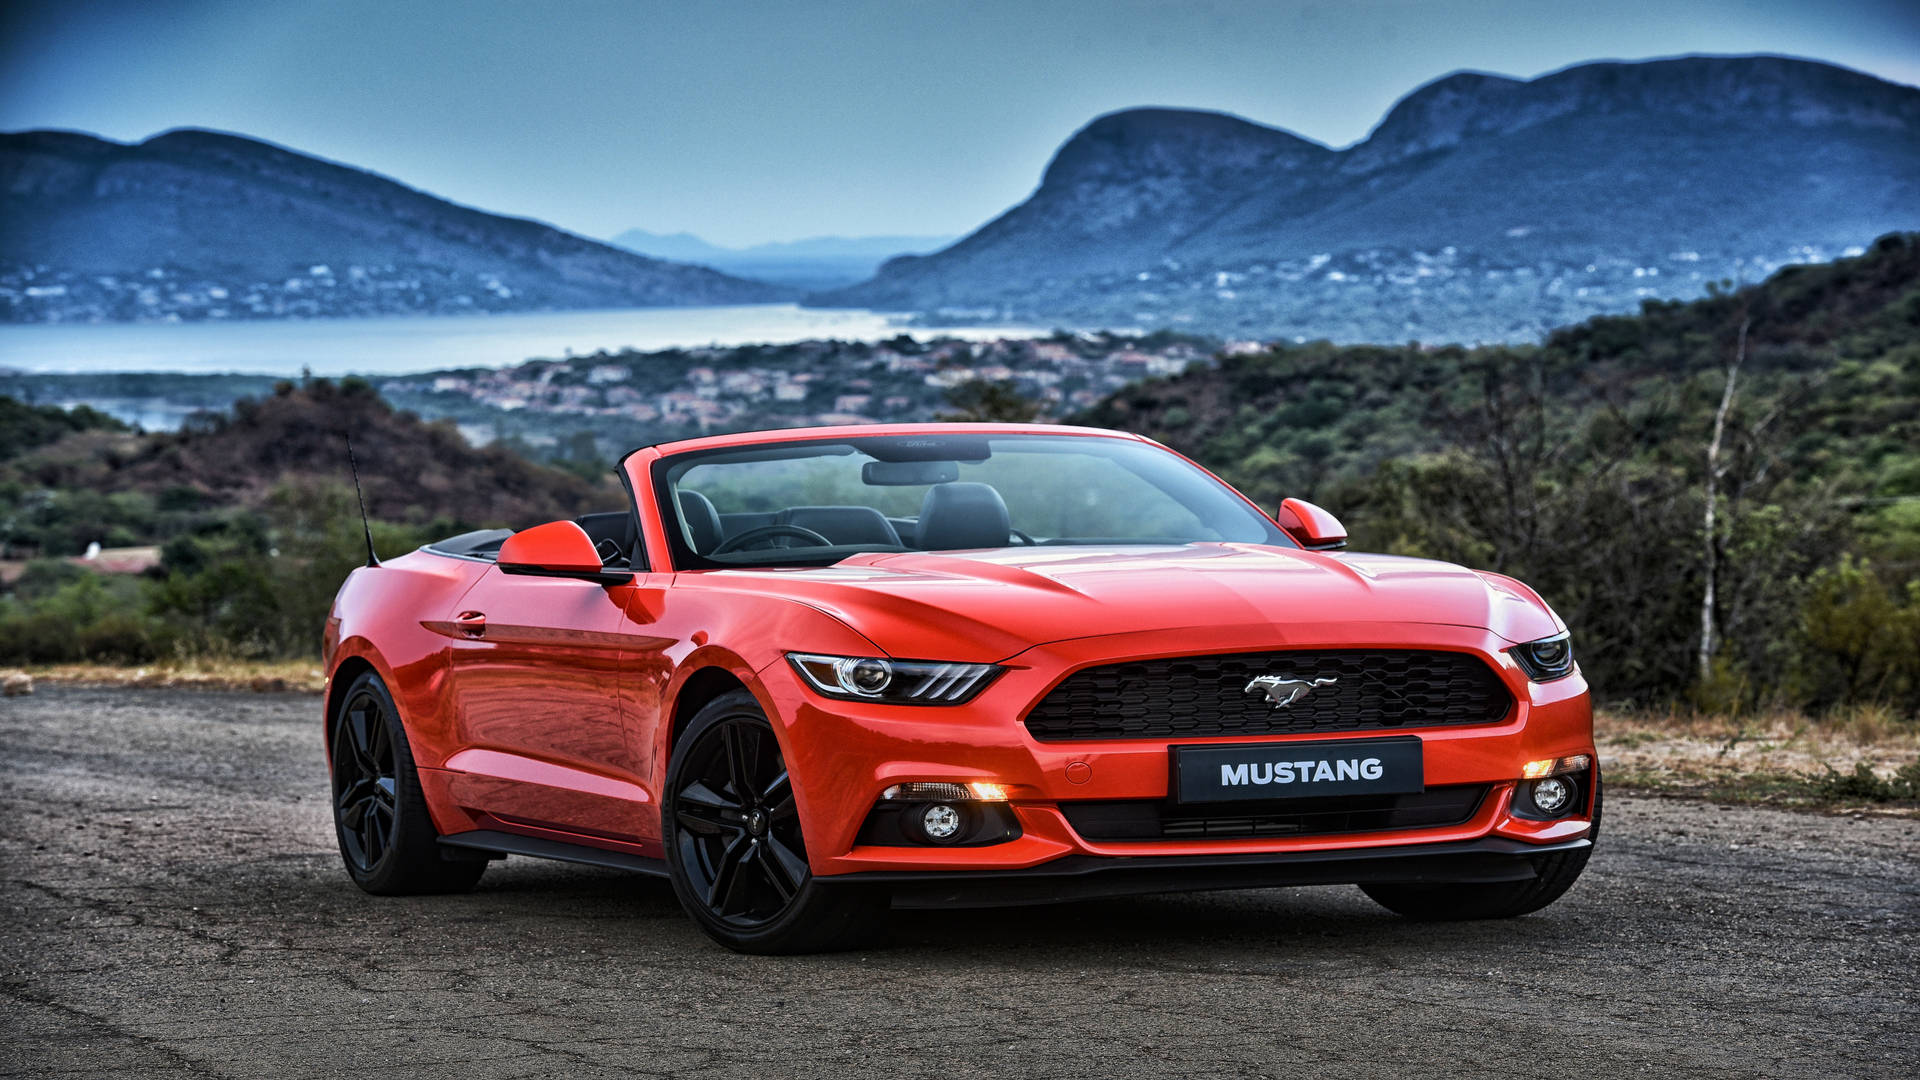 Breathtaking 4k Ultra Hd Mustang Ford In Vibrant Orange Background